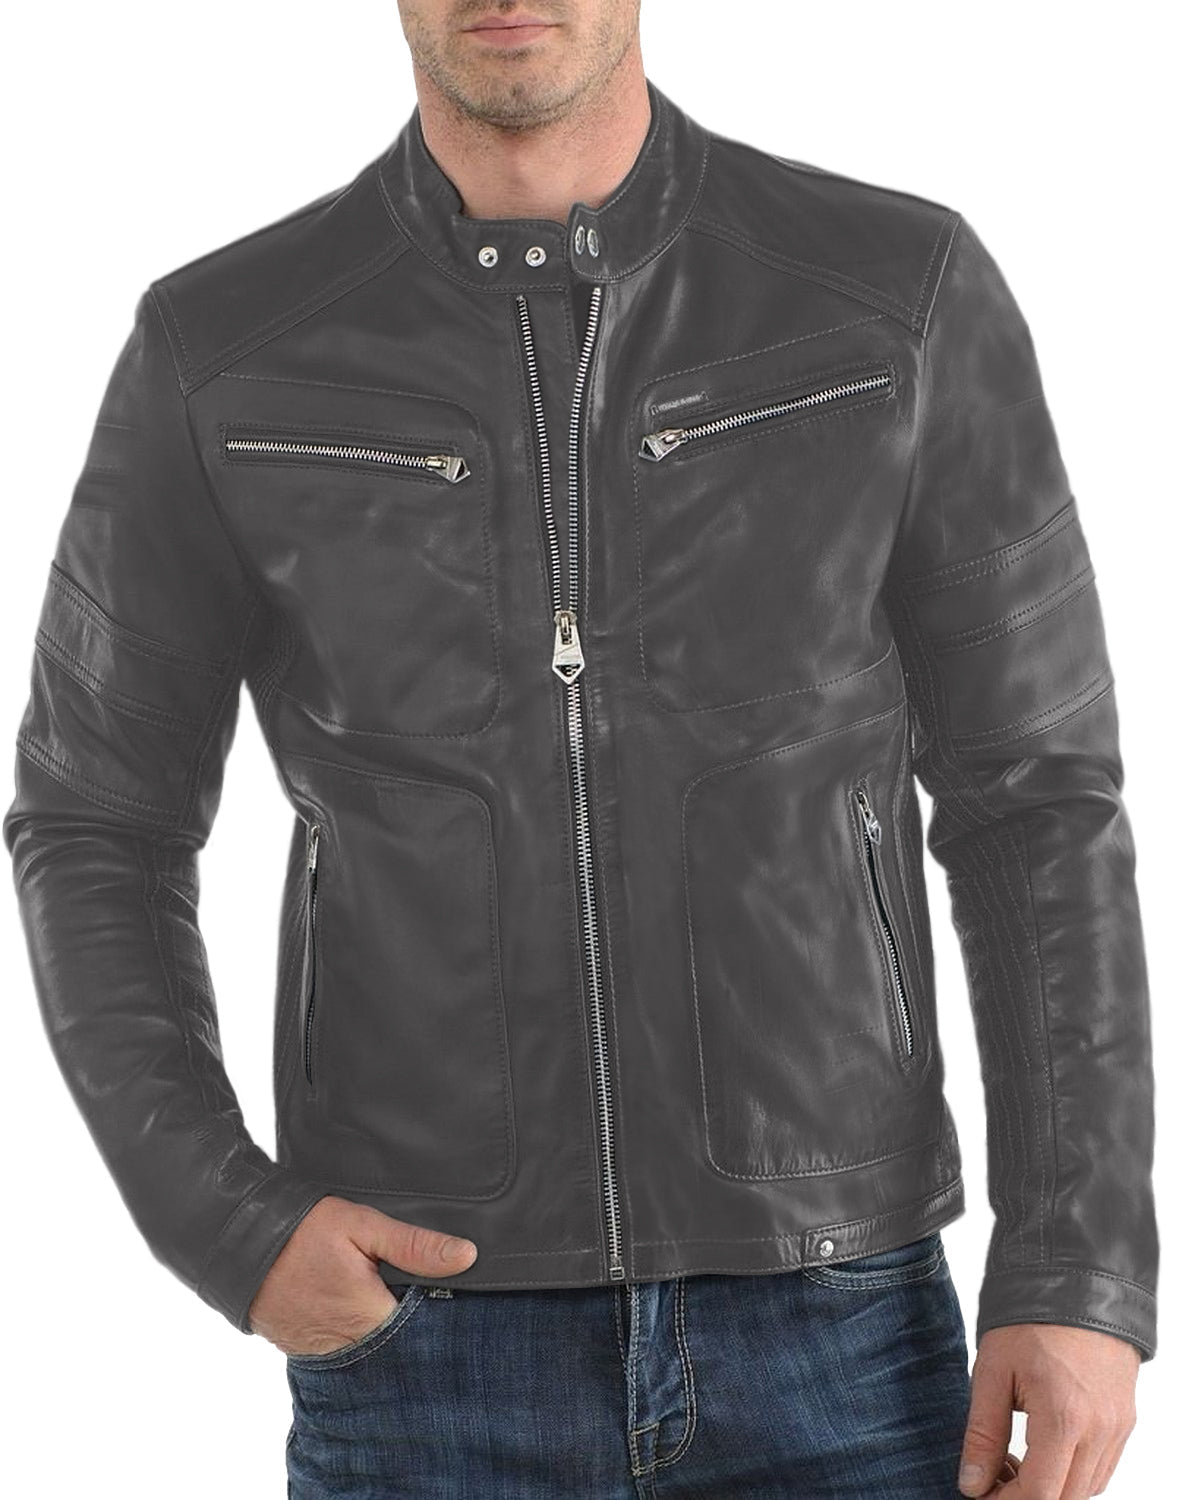 Leather Jackets Hub Mens Genuine Lambskin Leather Jacket (Black, Fencing Jacket) - 1501320